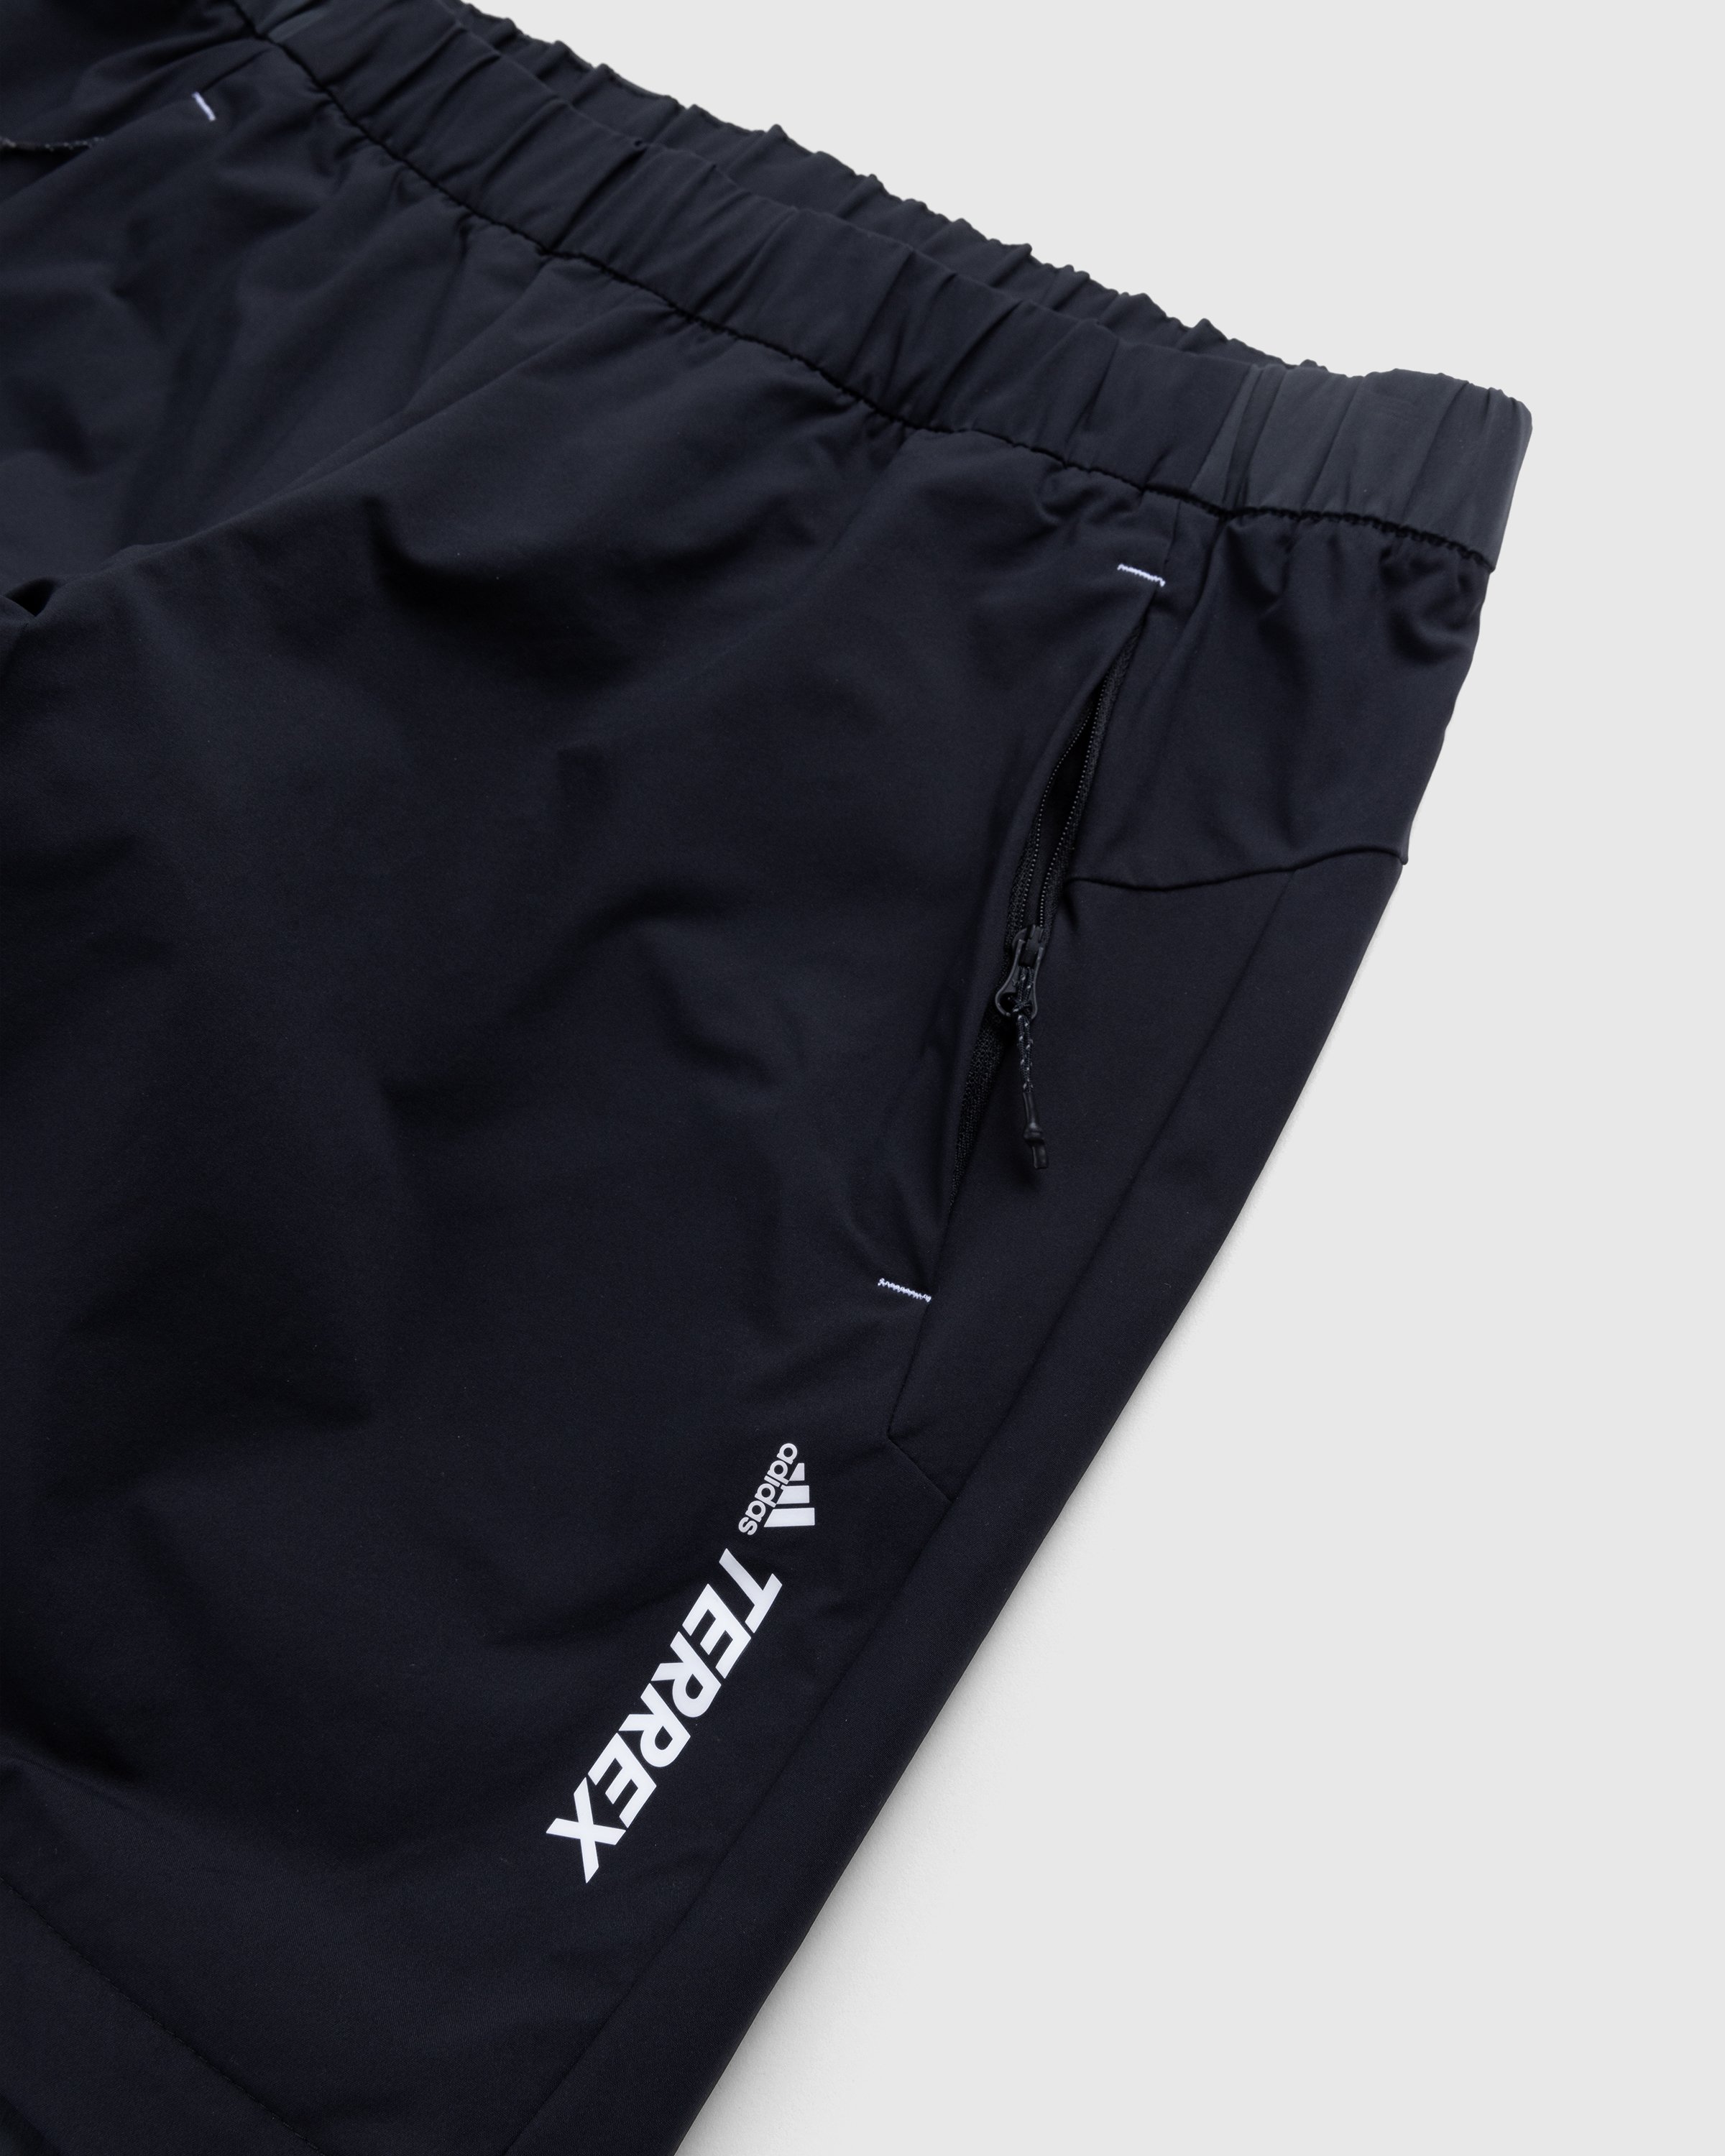 Adidas - Voyager Pants Black/Carbon - Clothing - Black - Image 4